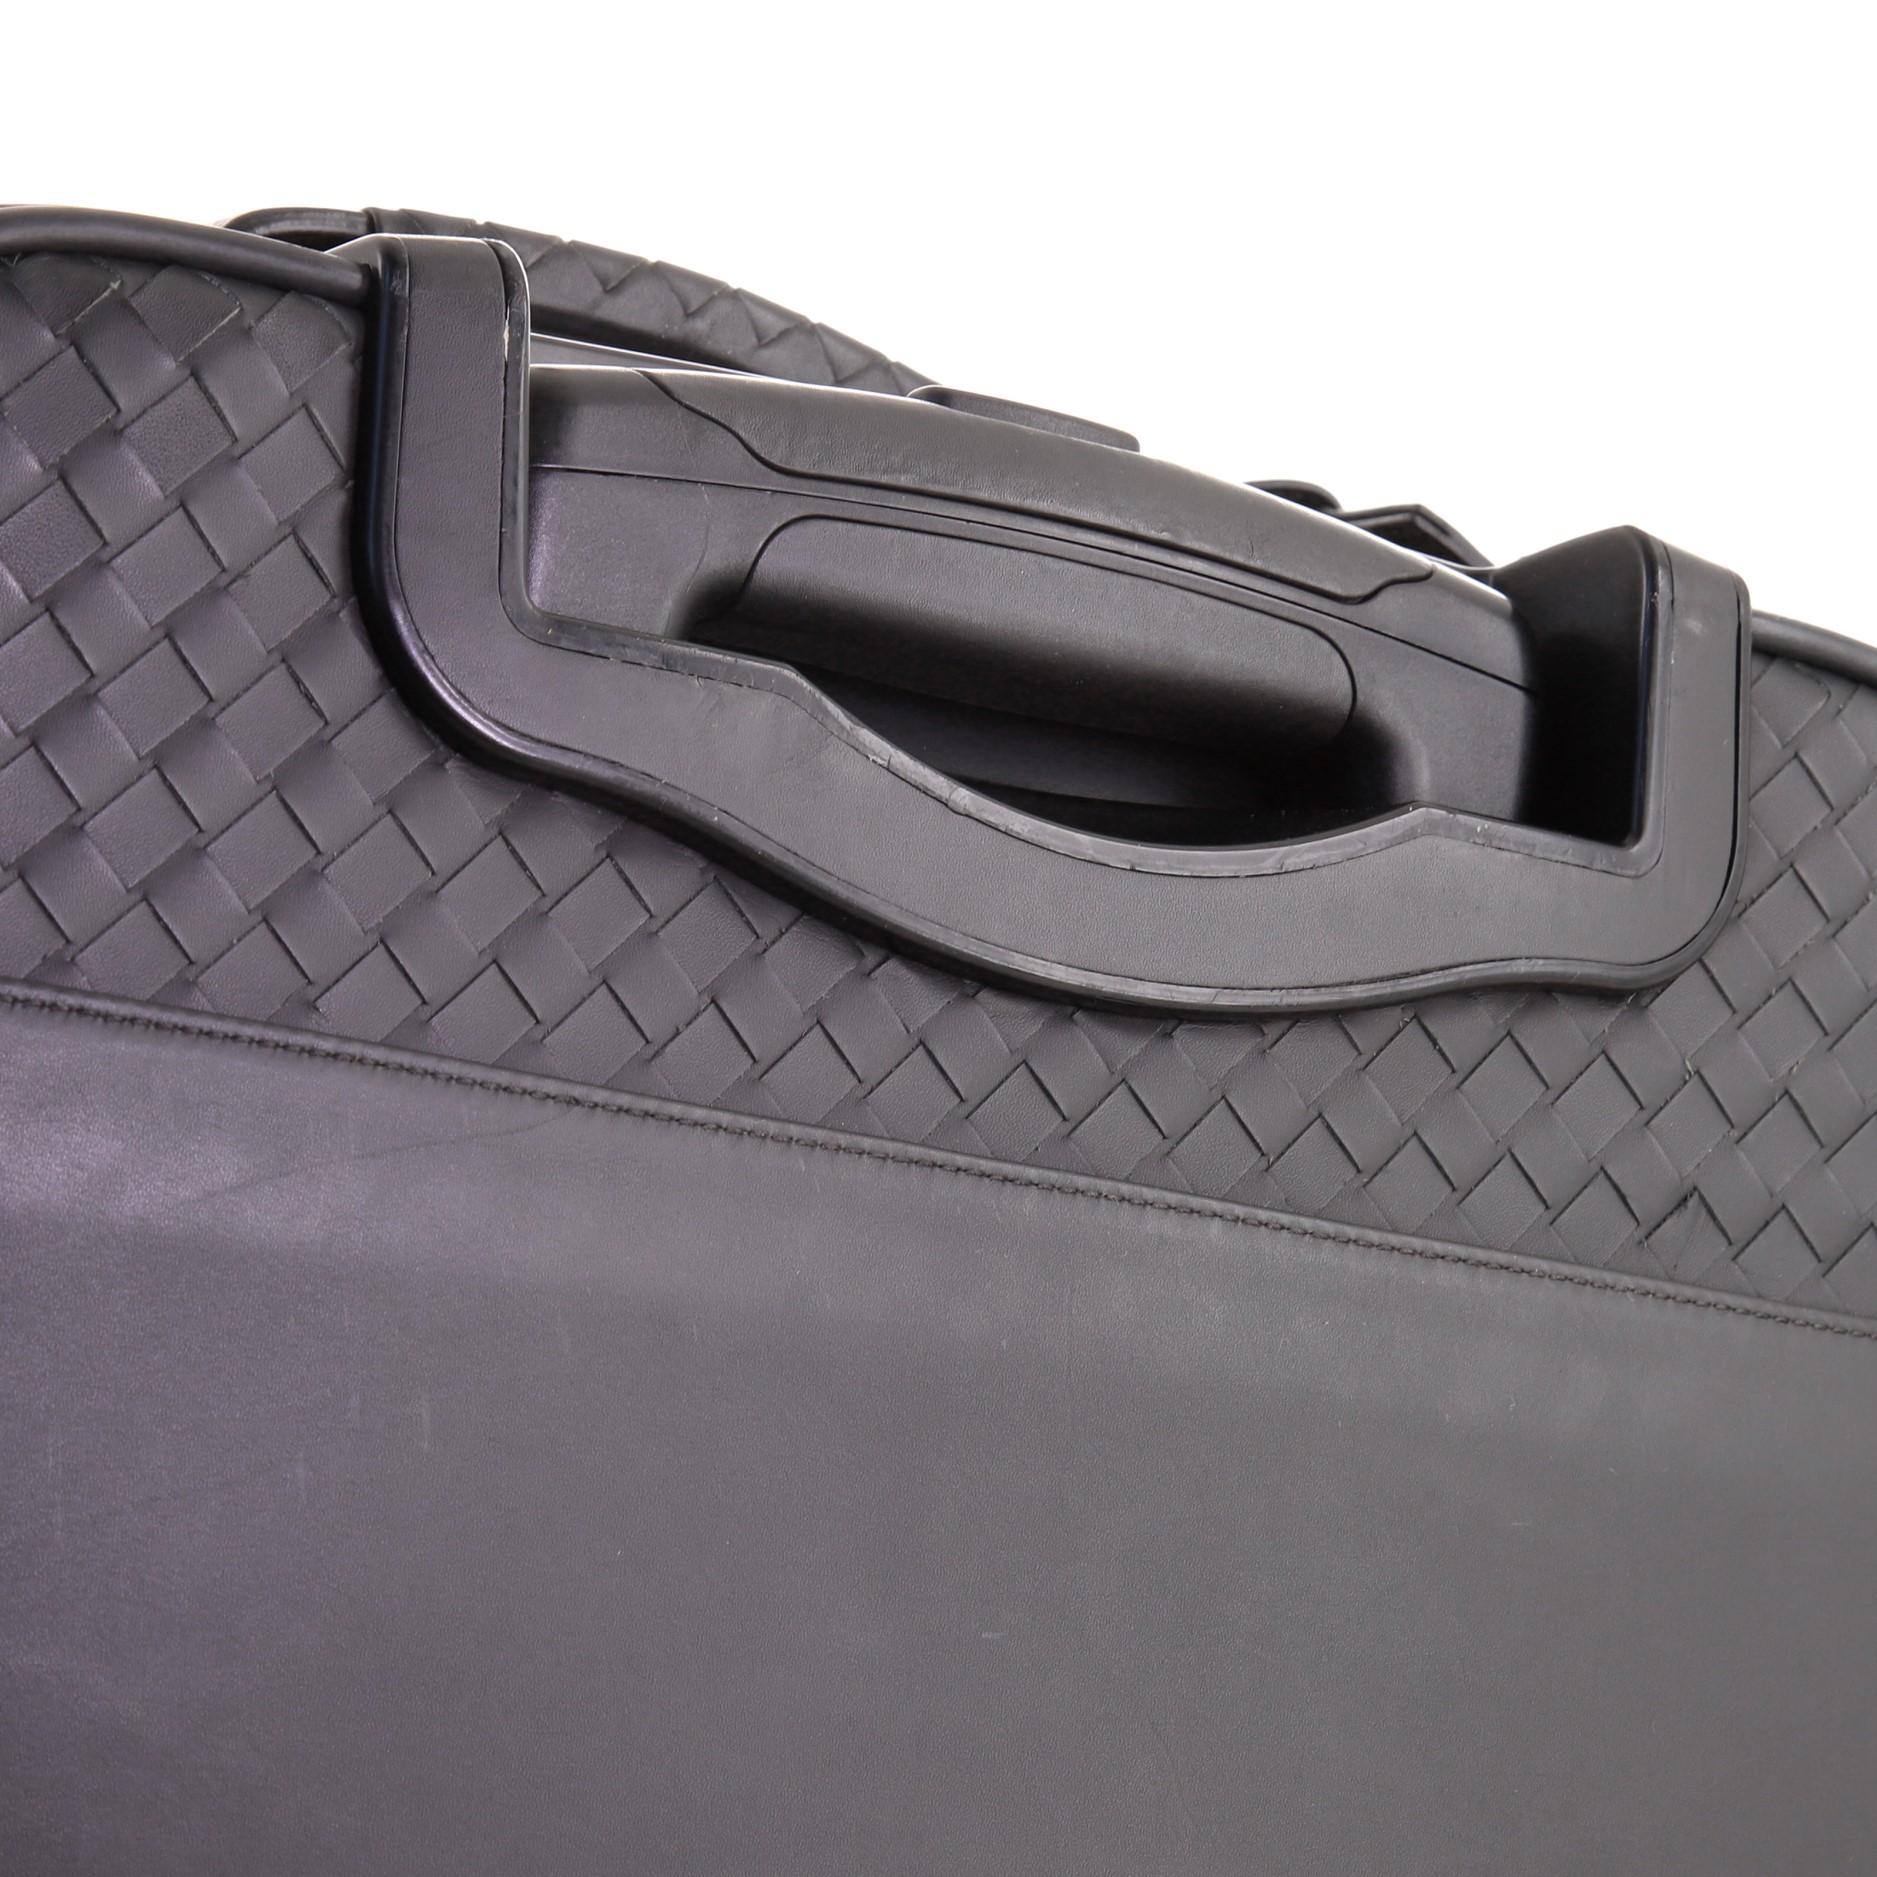 Bottega Veneta Trolley Rolling Luggage Intrecciato Leather Medium 2